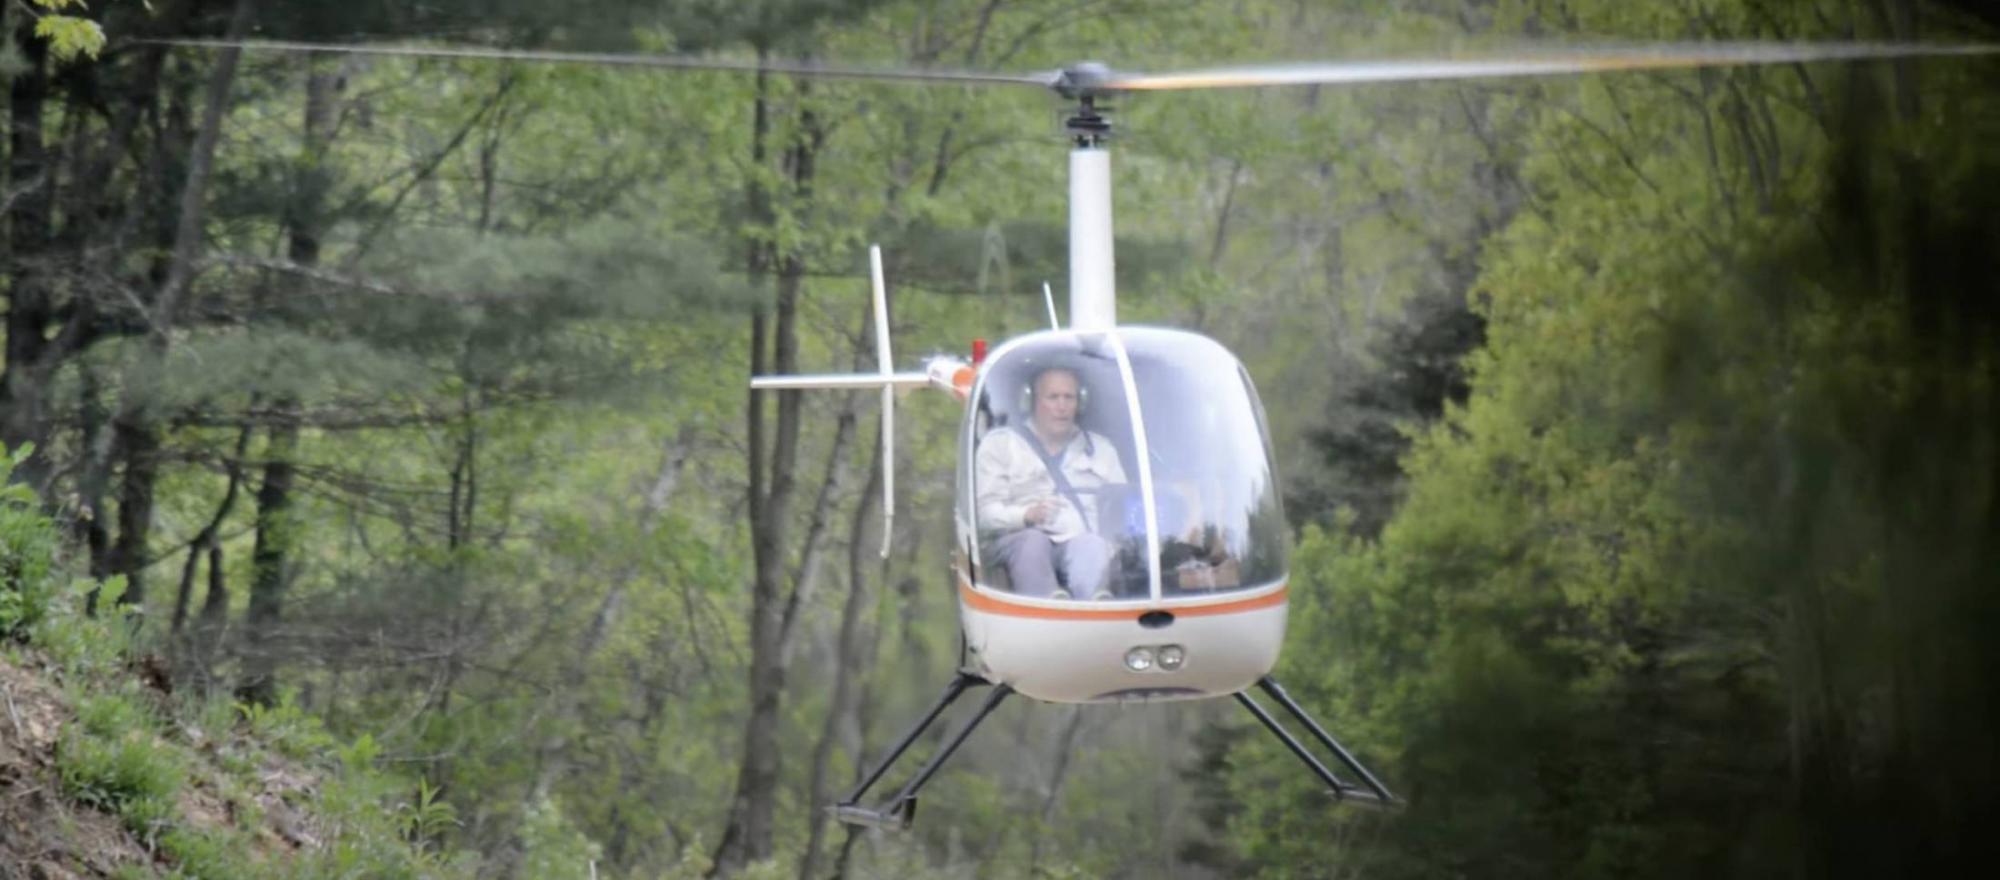 Antonio Santonastaso piloting a Robinson R22 helicopter from unapproved landing zone in his back yard 